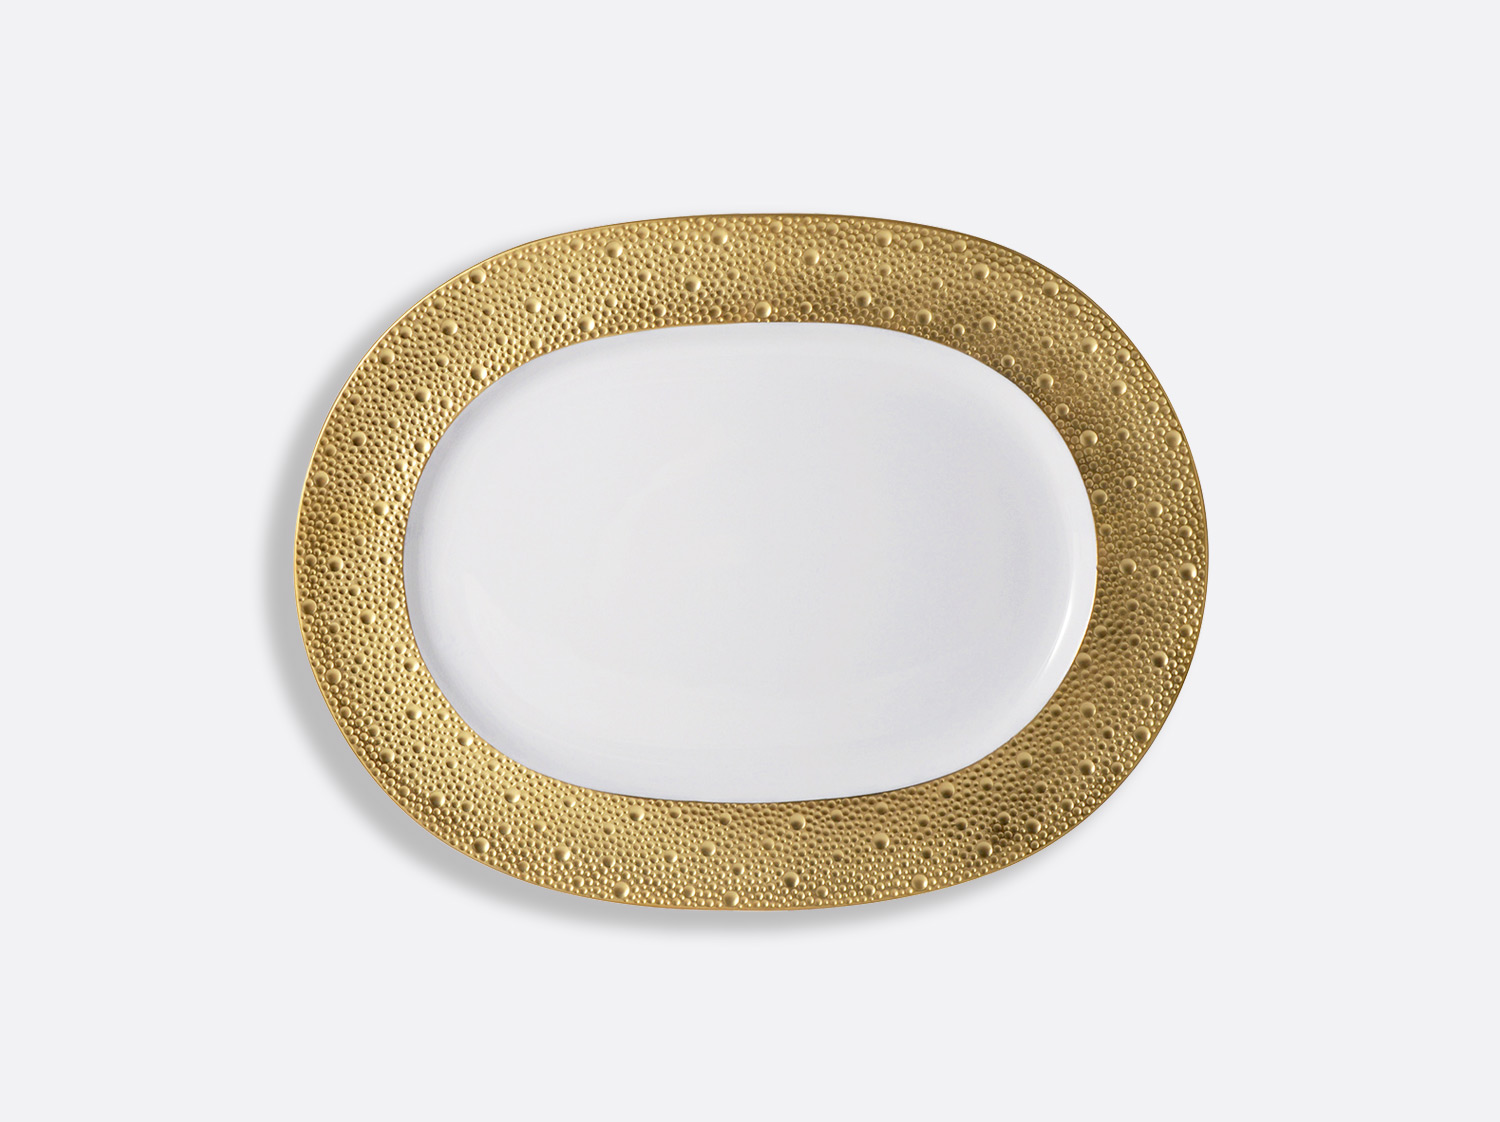 China Oval platter 14" of the collection Ecume gold | Bernardaud